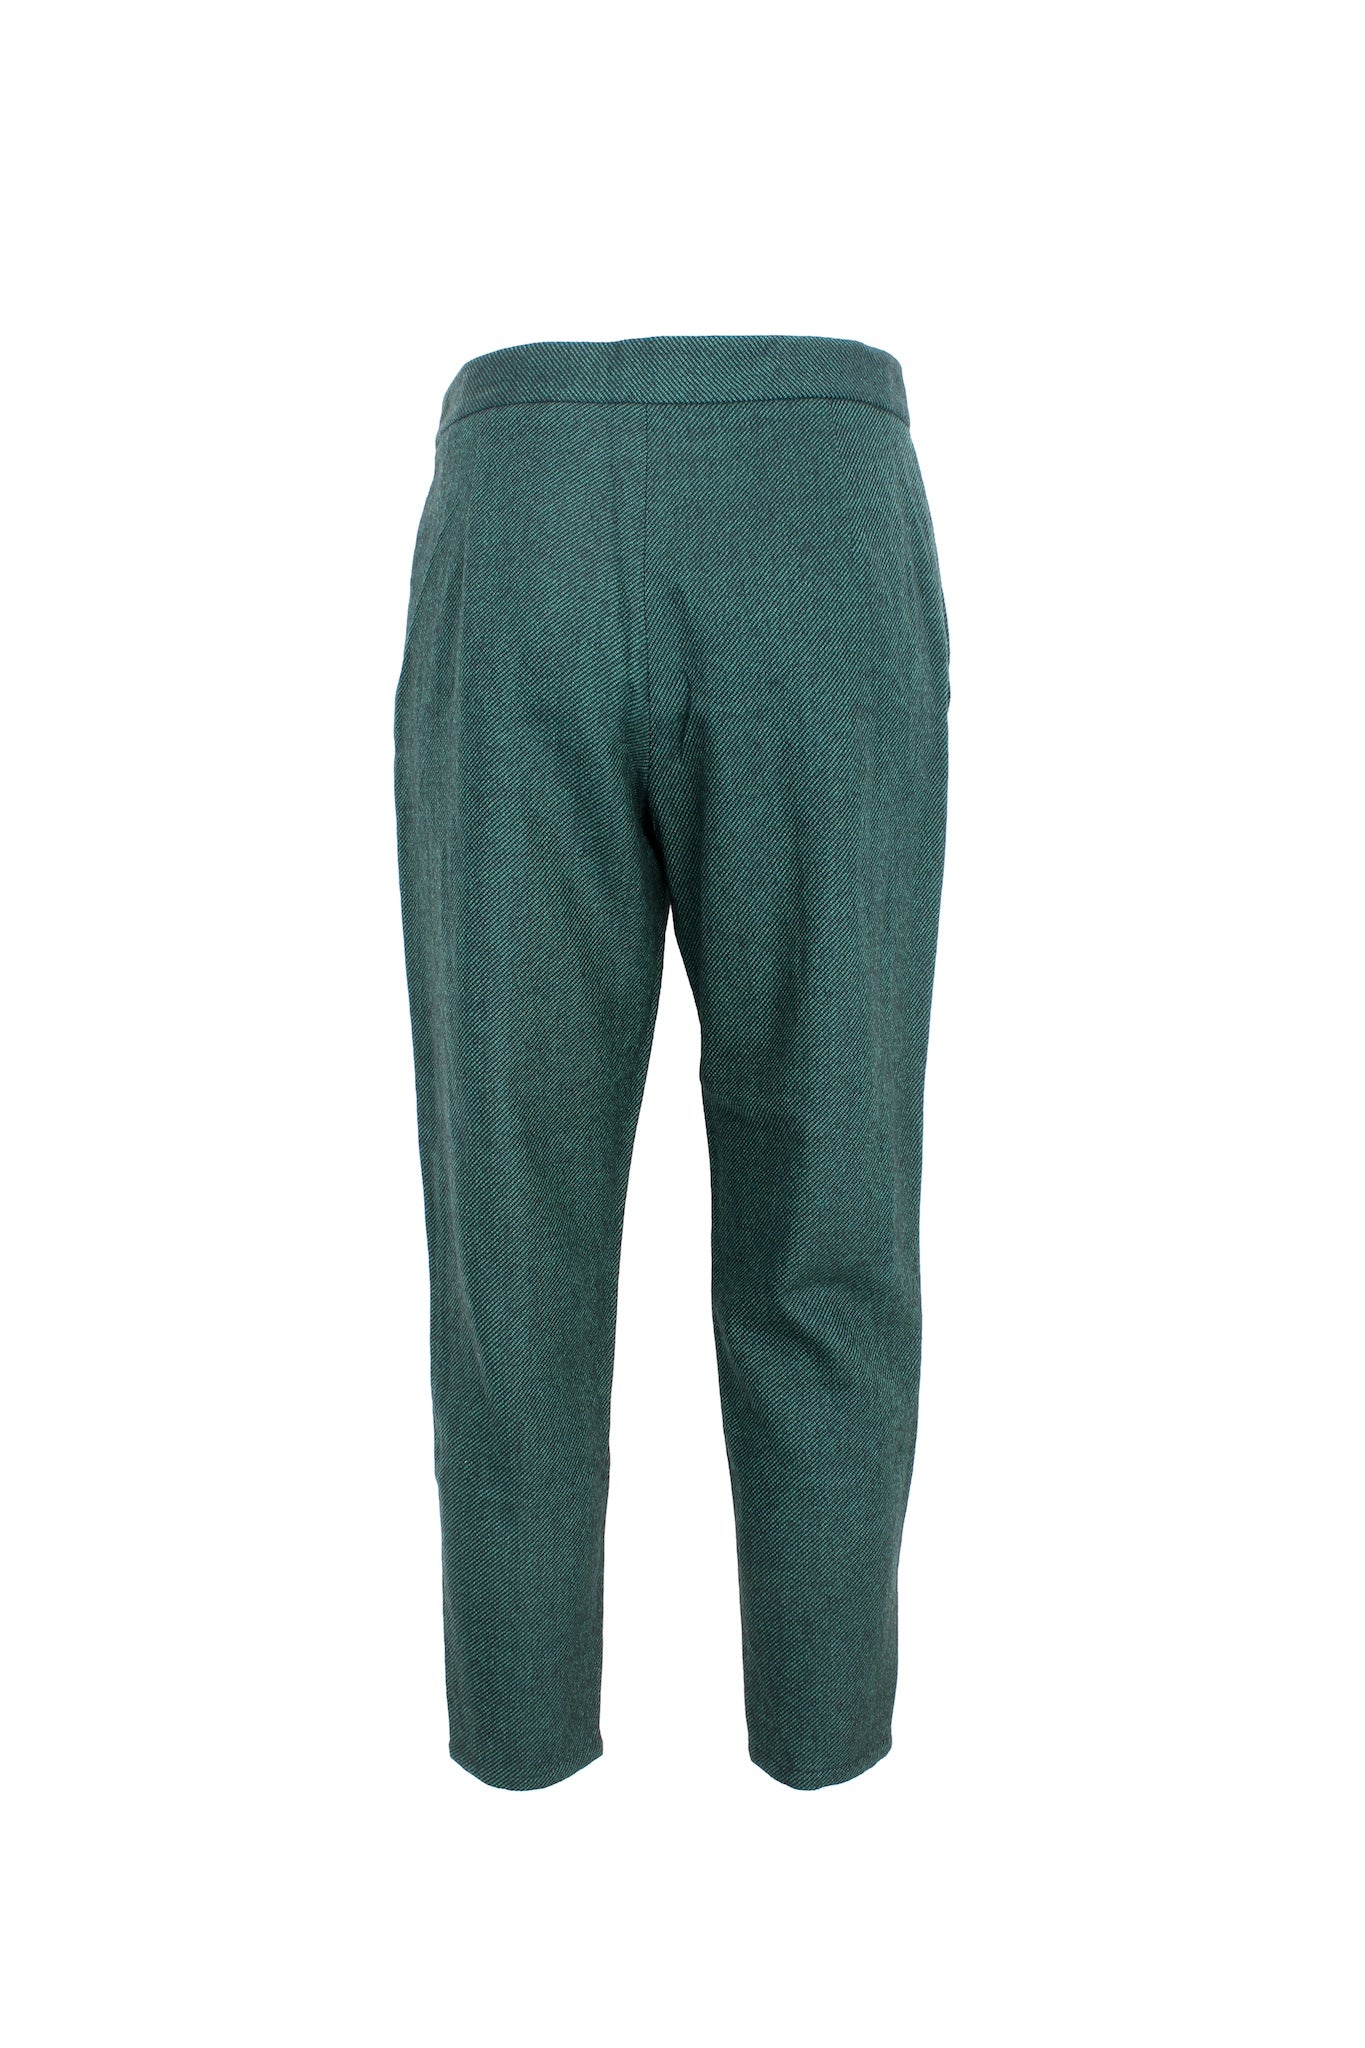 Stella McCartney Green Wool Capri Pants 2000s